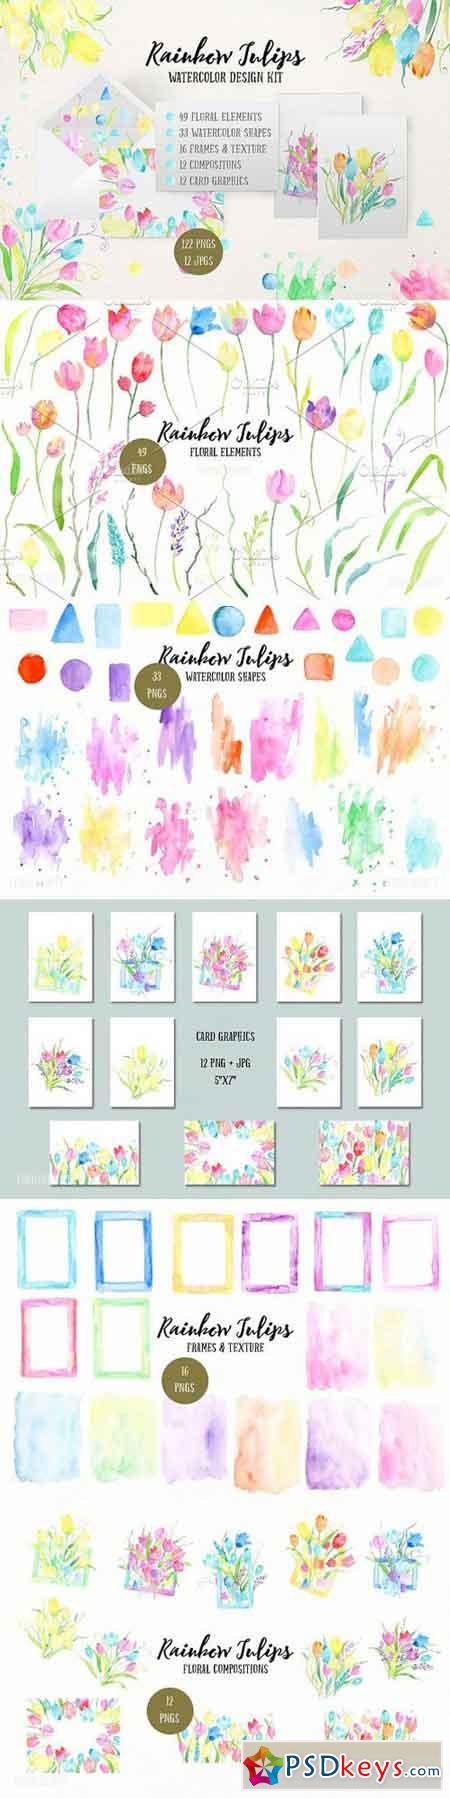 Watercolor Design Kit Rainbow Tulips 1364159